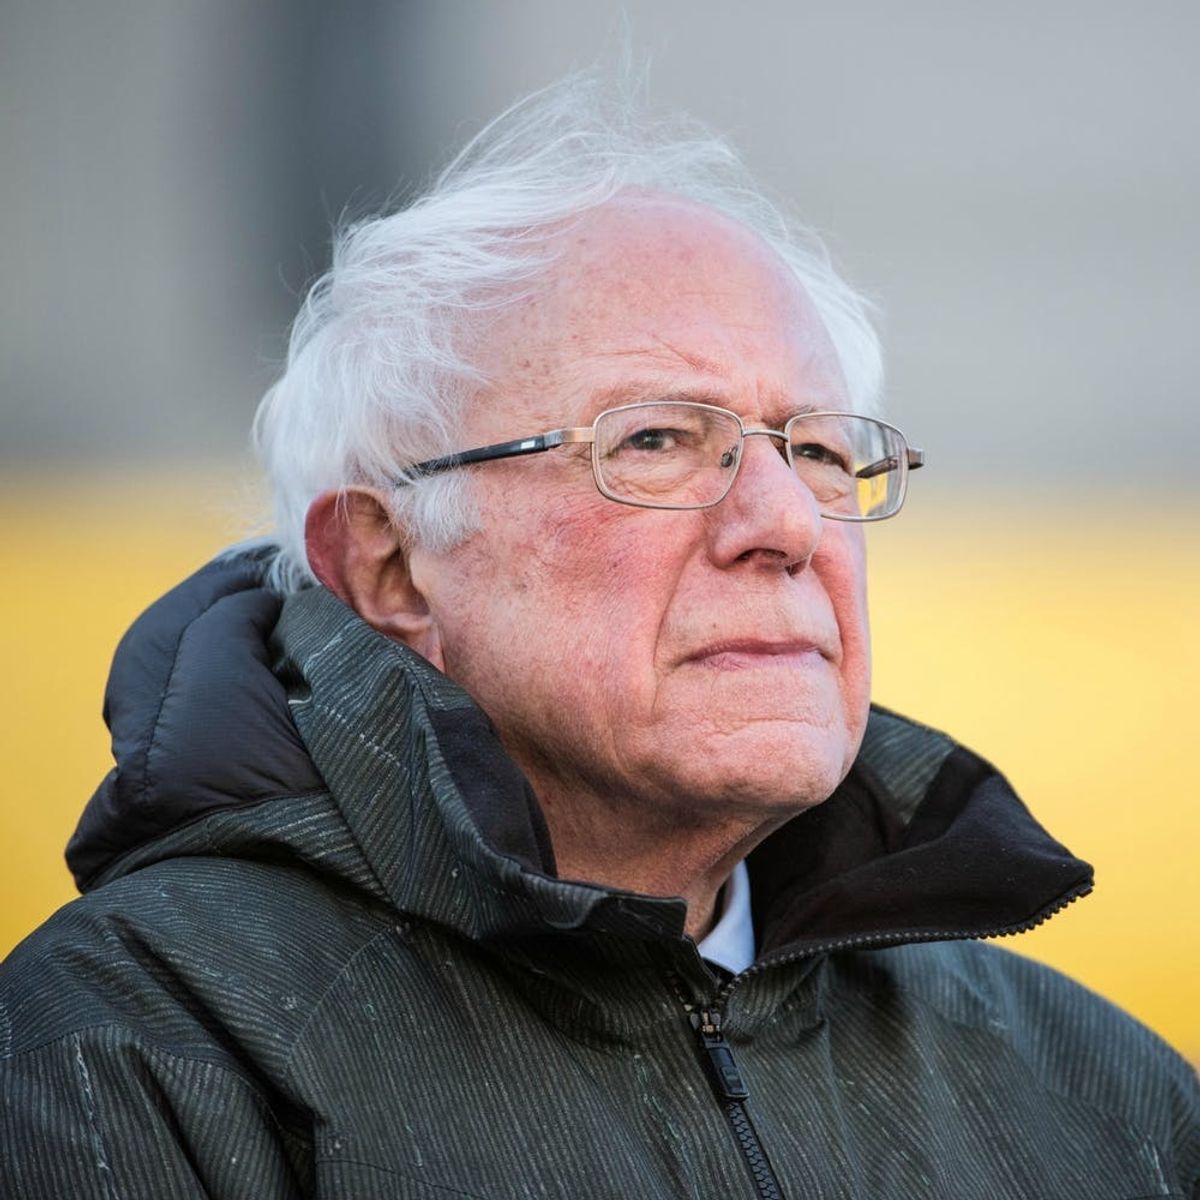 Bernie Sanders Is Officially a Frontrunner for President in 2020